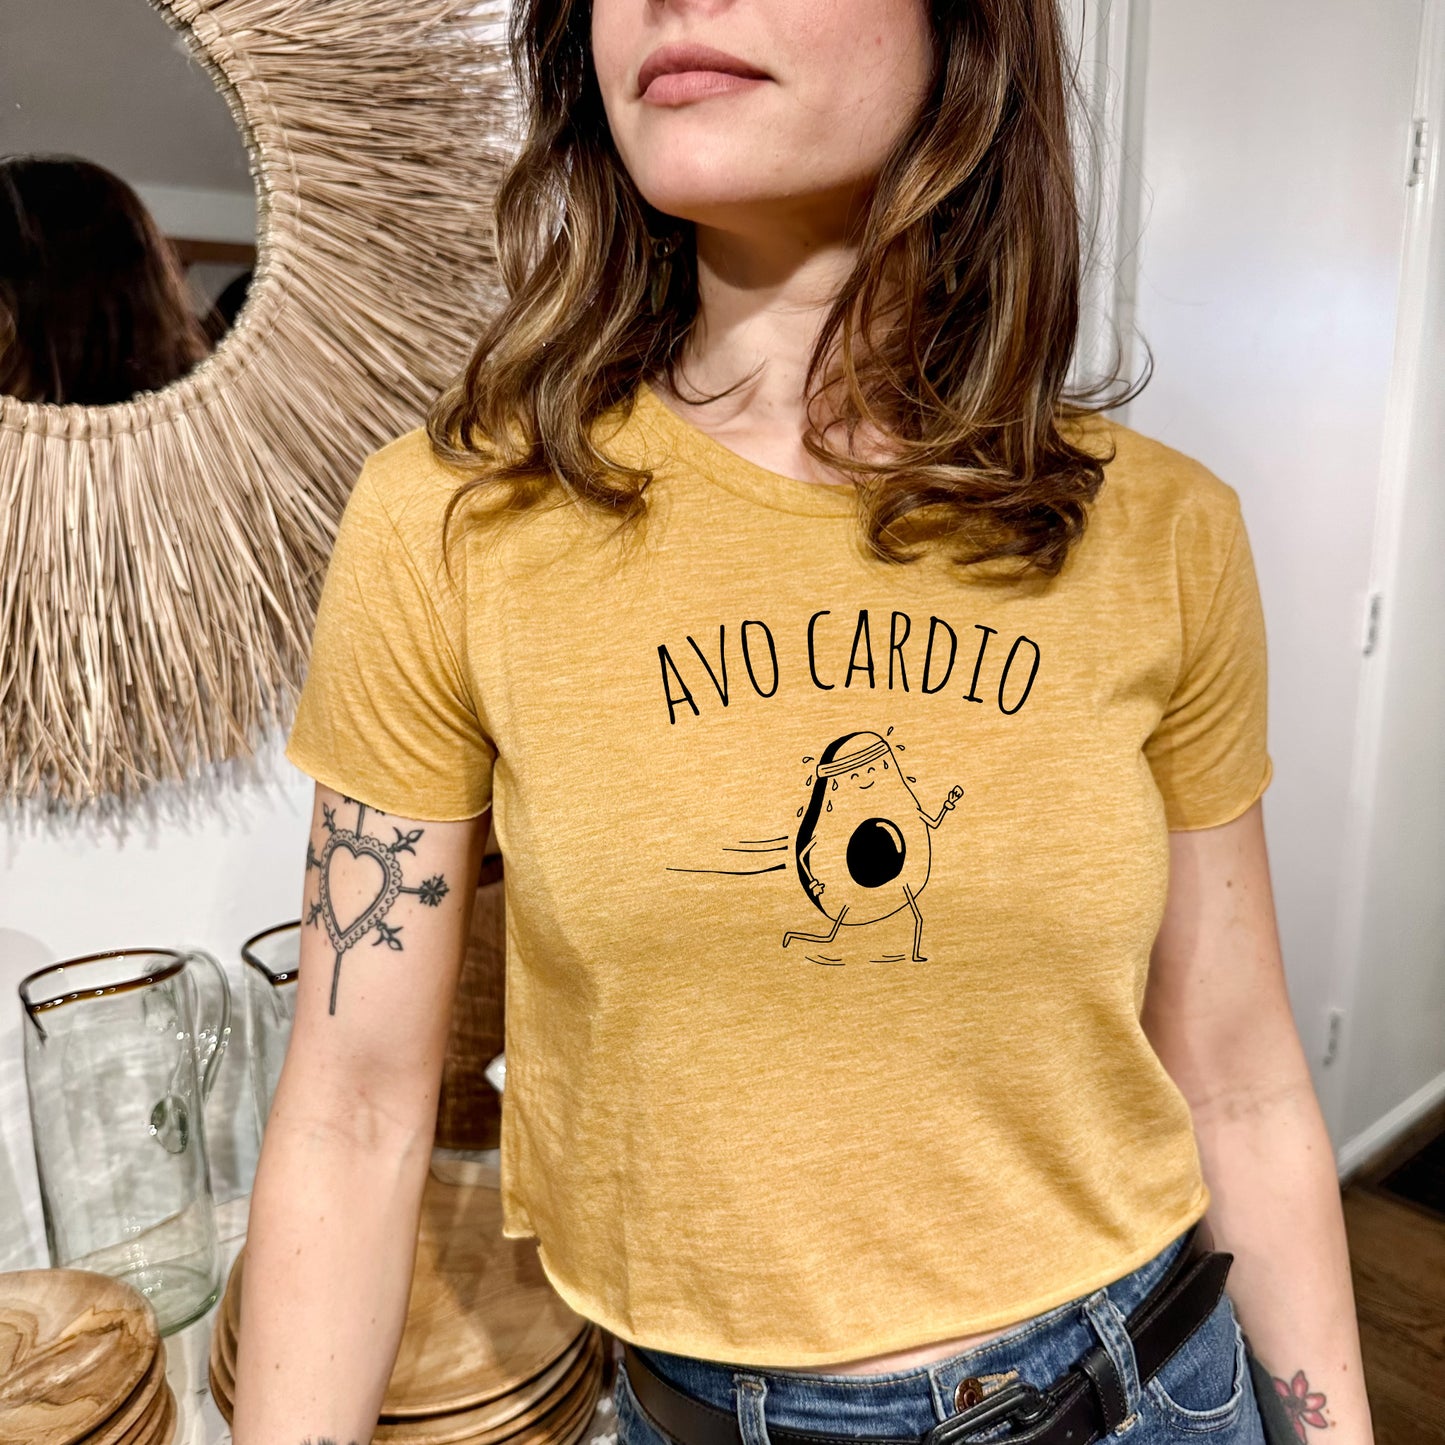 Avo Cardio (Avocado) - Women's Crop Tee - Heather Gray or Gold